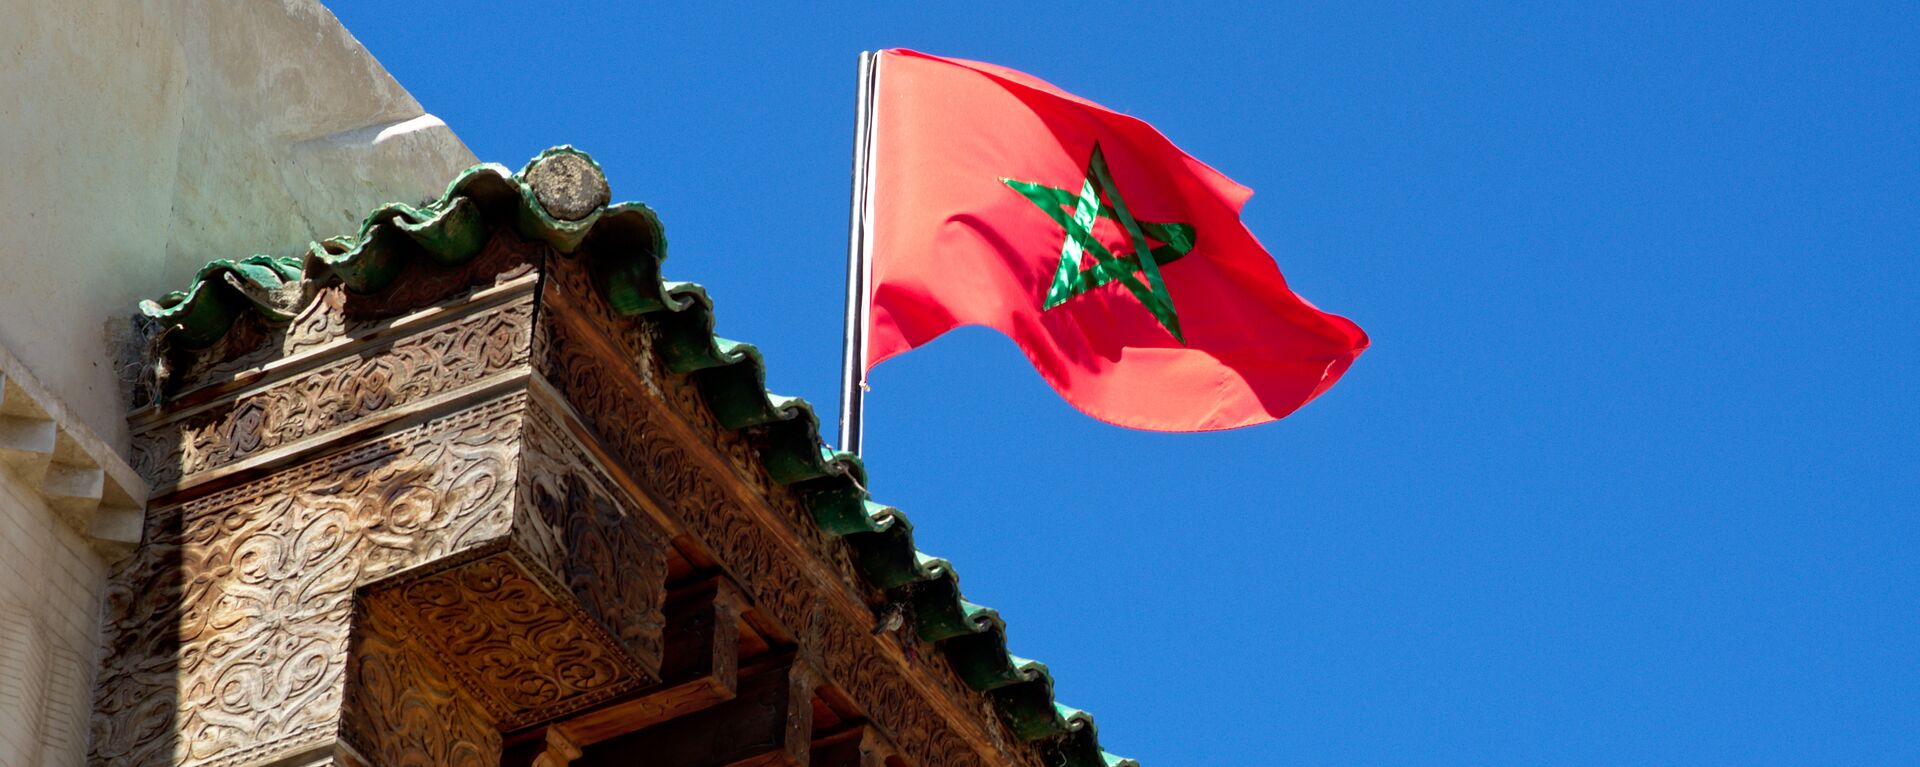 La bandera de Marruecos - Sputnik Mundo, 1920, 28.05.2021